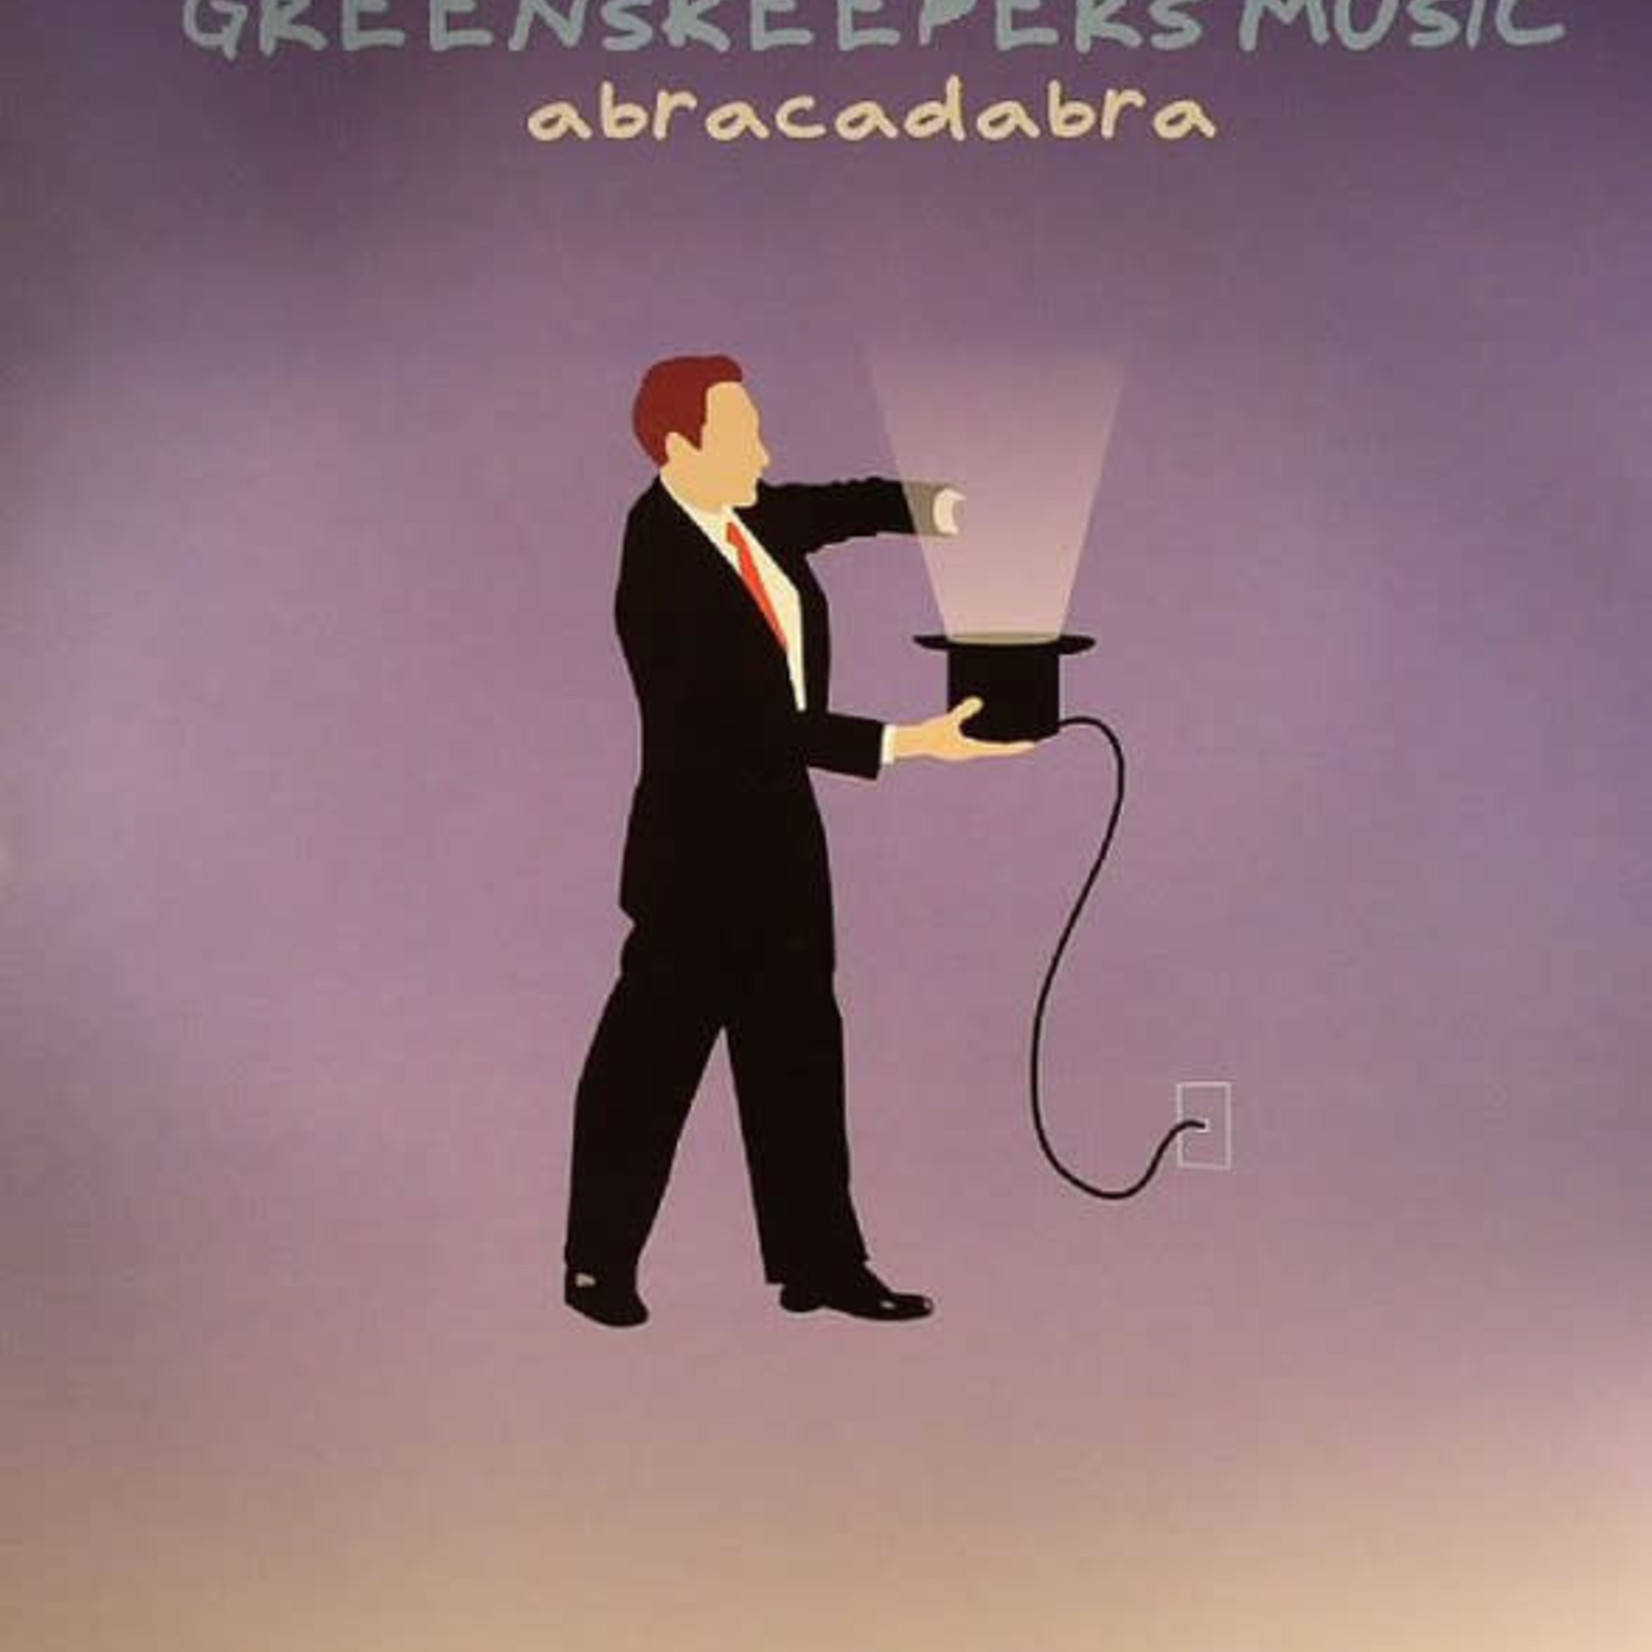 Greenskeepers – Abracadabra